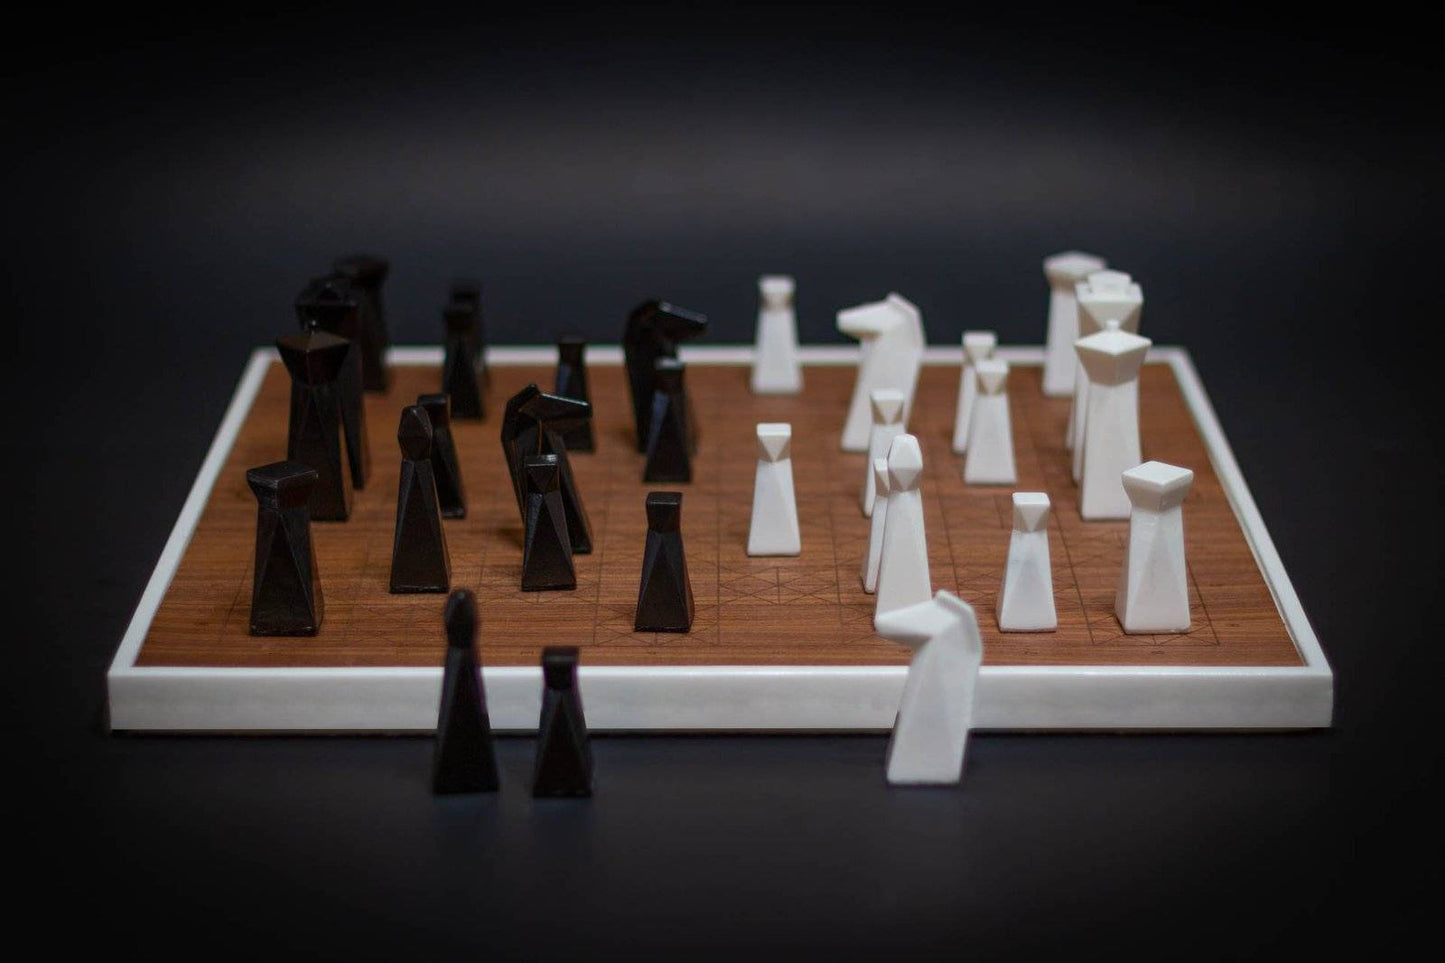 Walnut Chess Set - Handmade geometric modern chess set design gift by PLA Concept